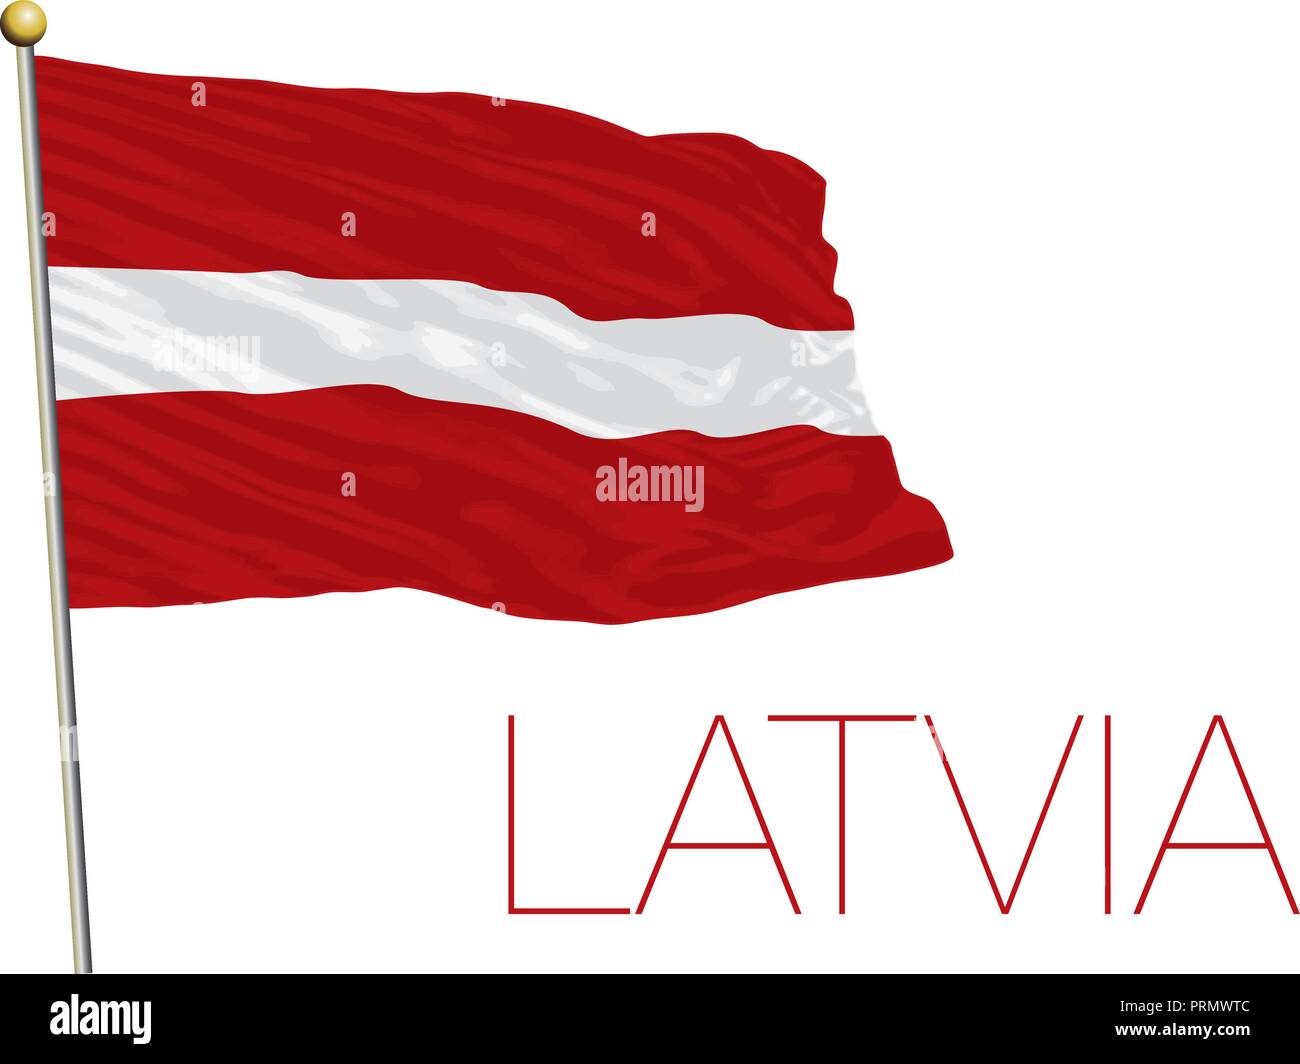 Latvia official flag, vector illustration Stock Vector